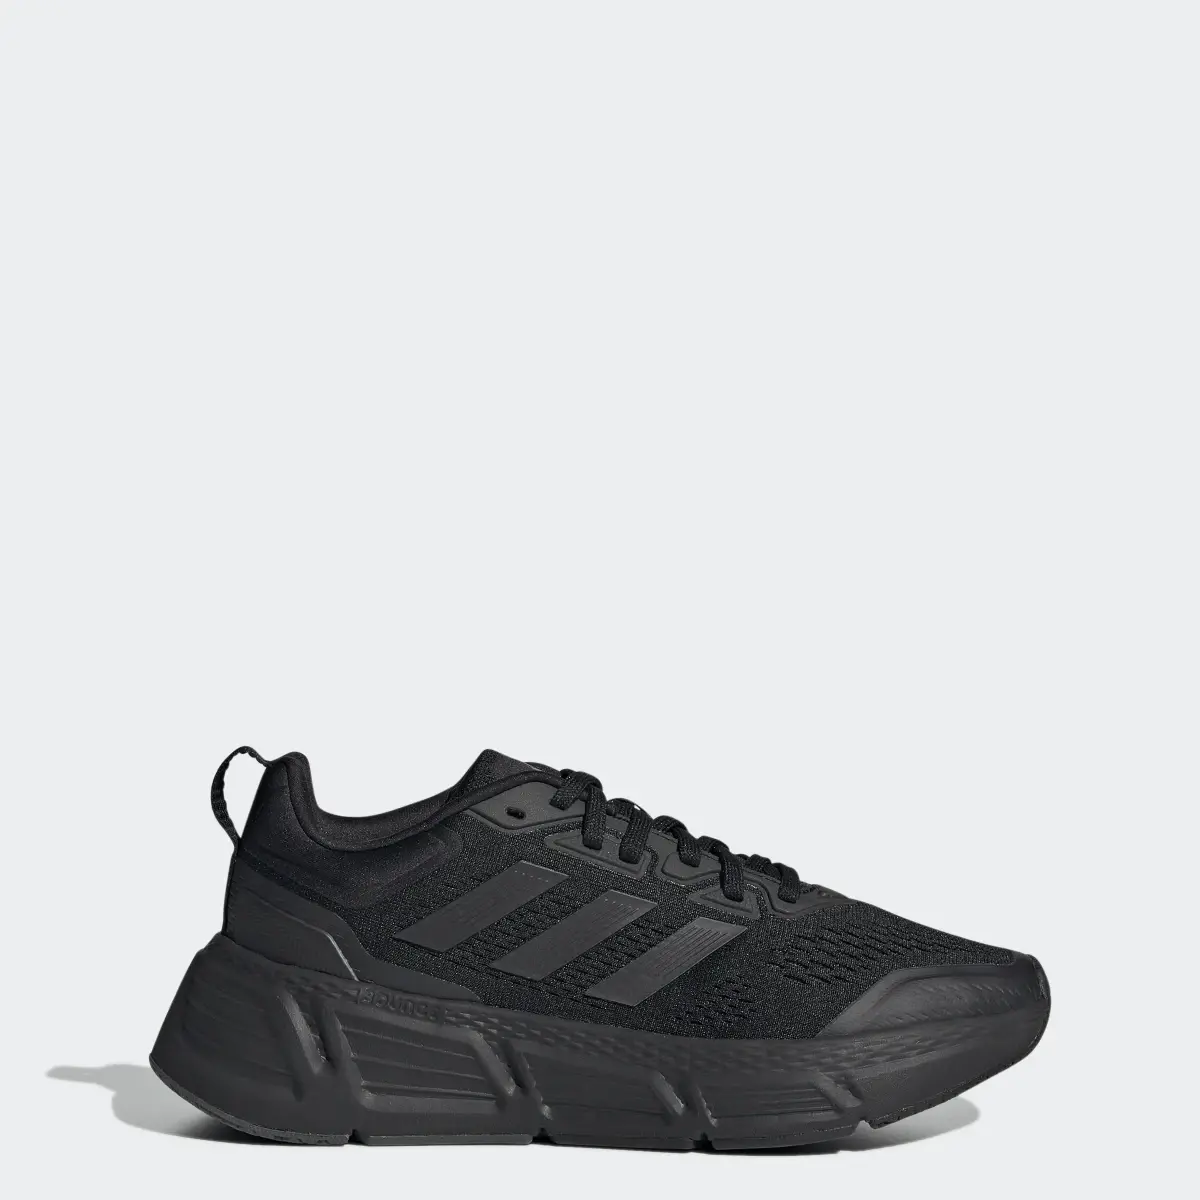 Adidas Questar Shoes. 1